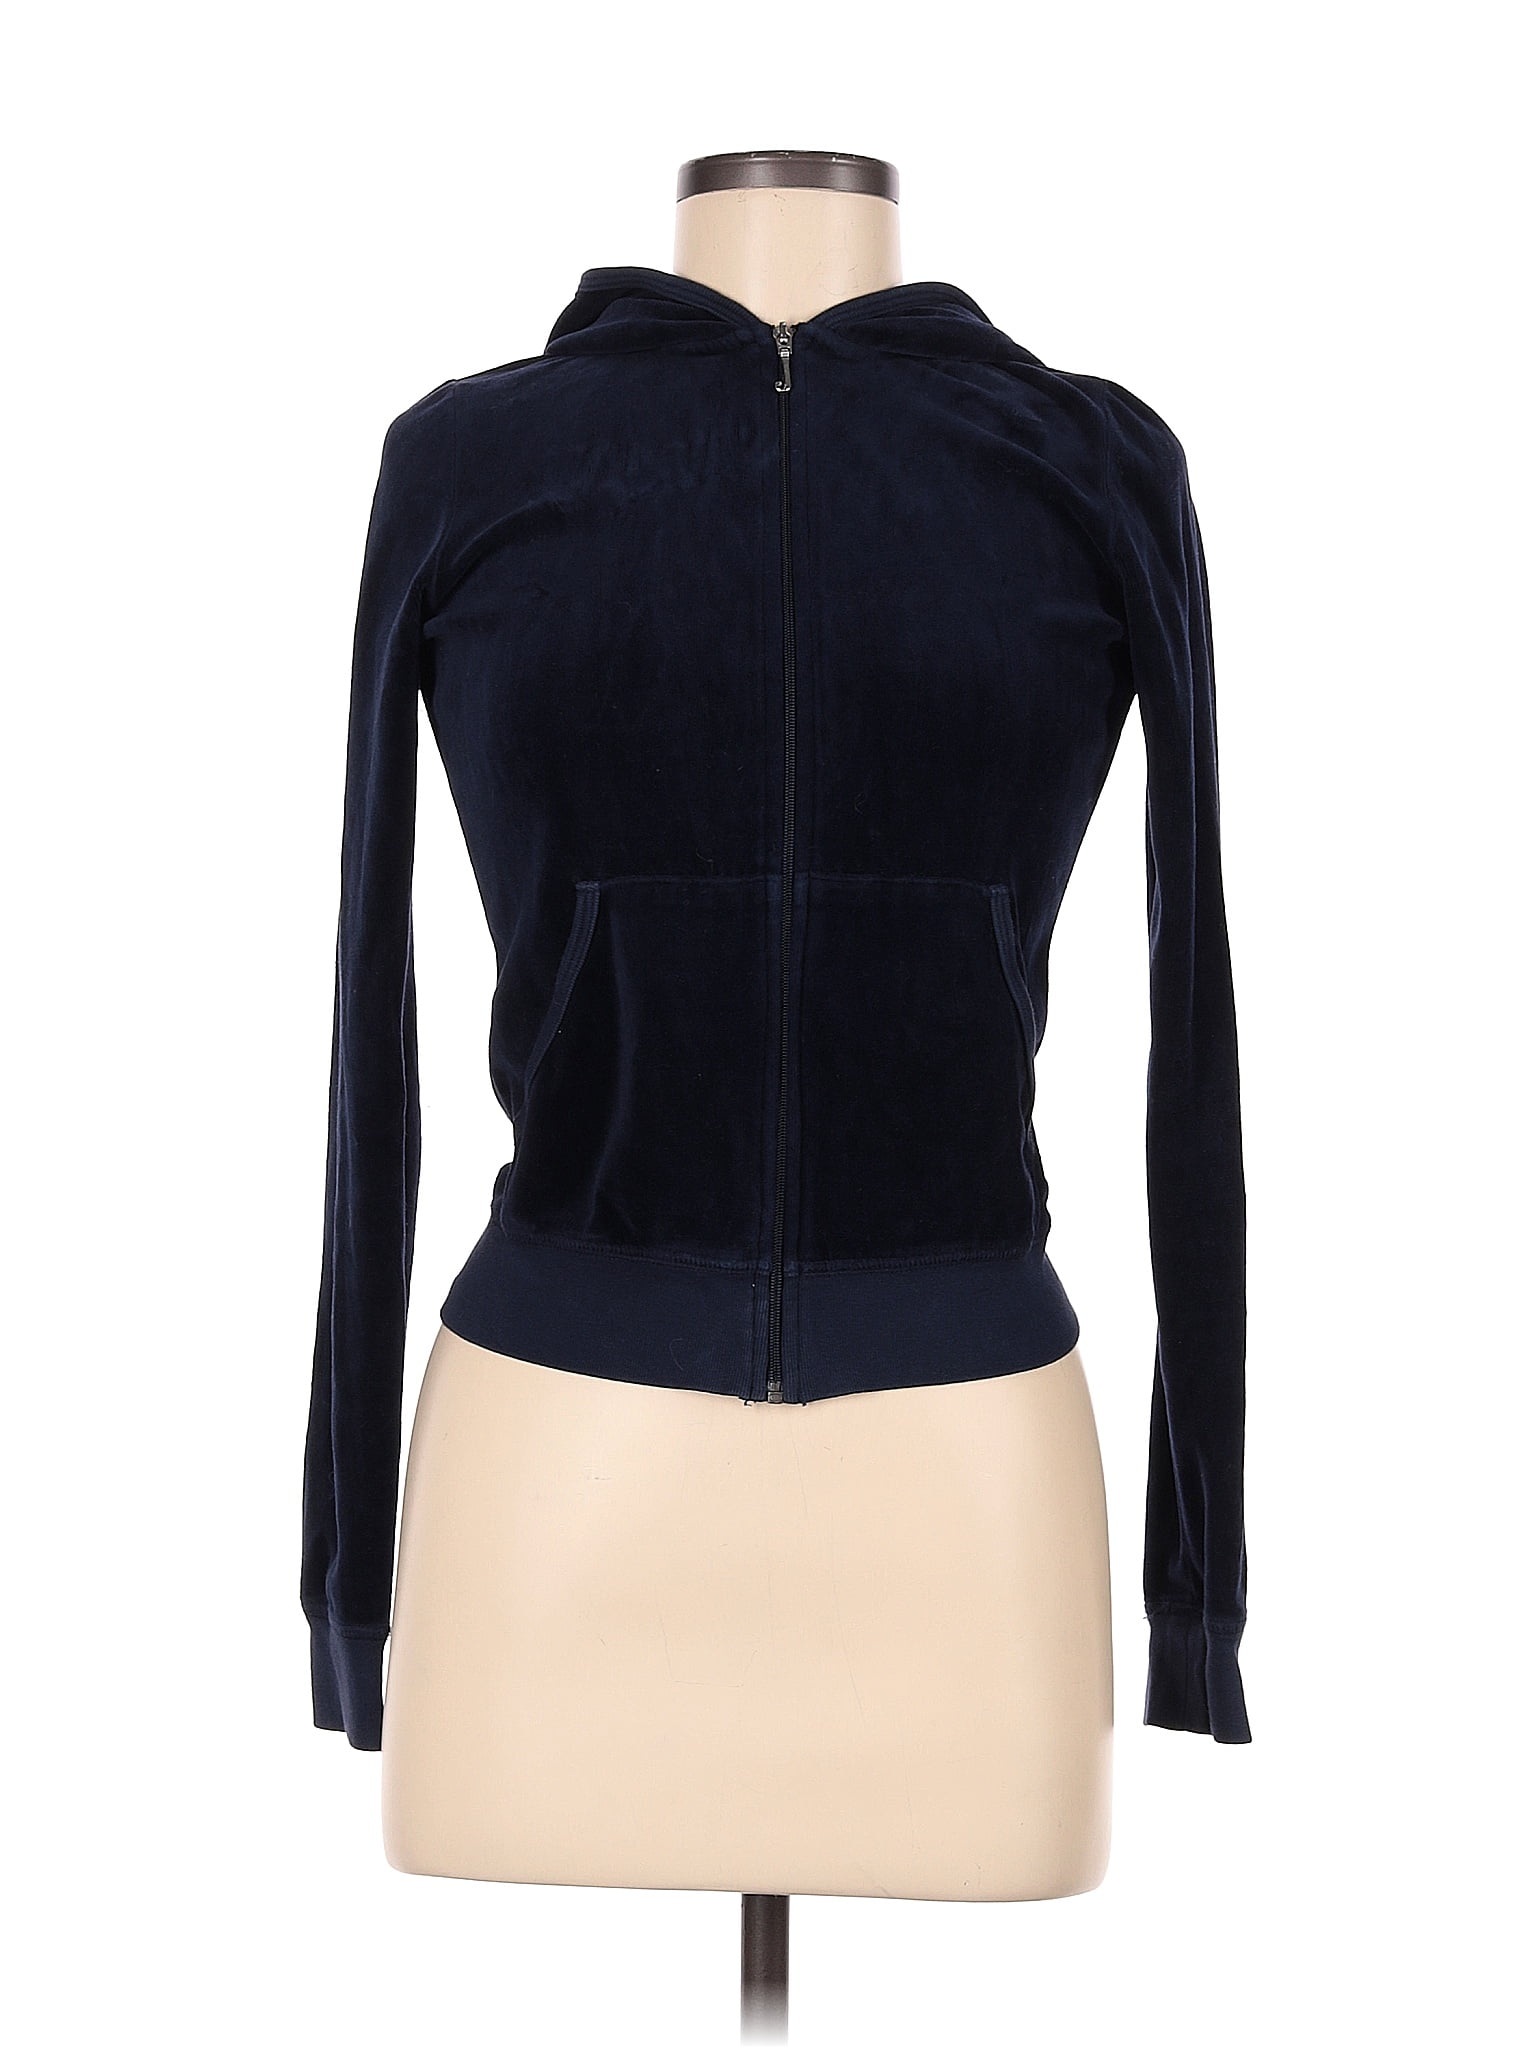 Juicy Couture Solid Navy Blue Zip Up Hoodie Size M - 73% off | thredUP